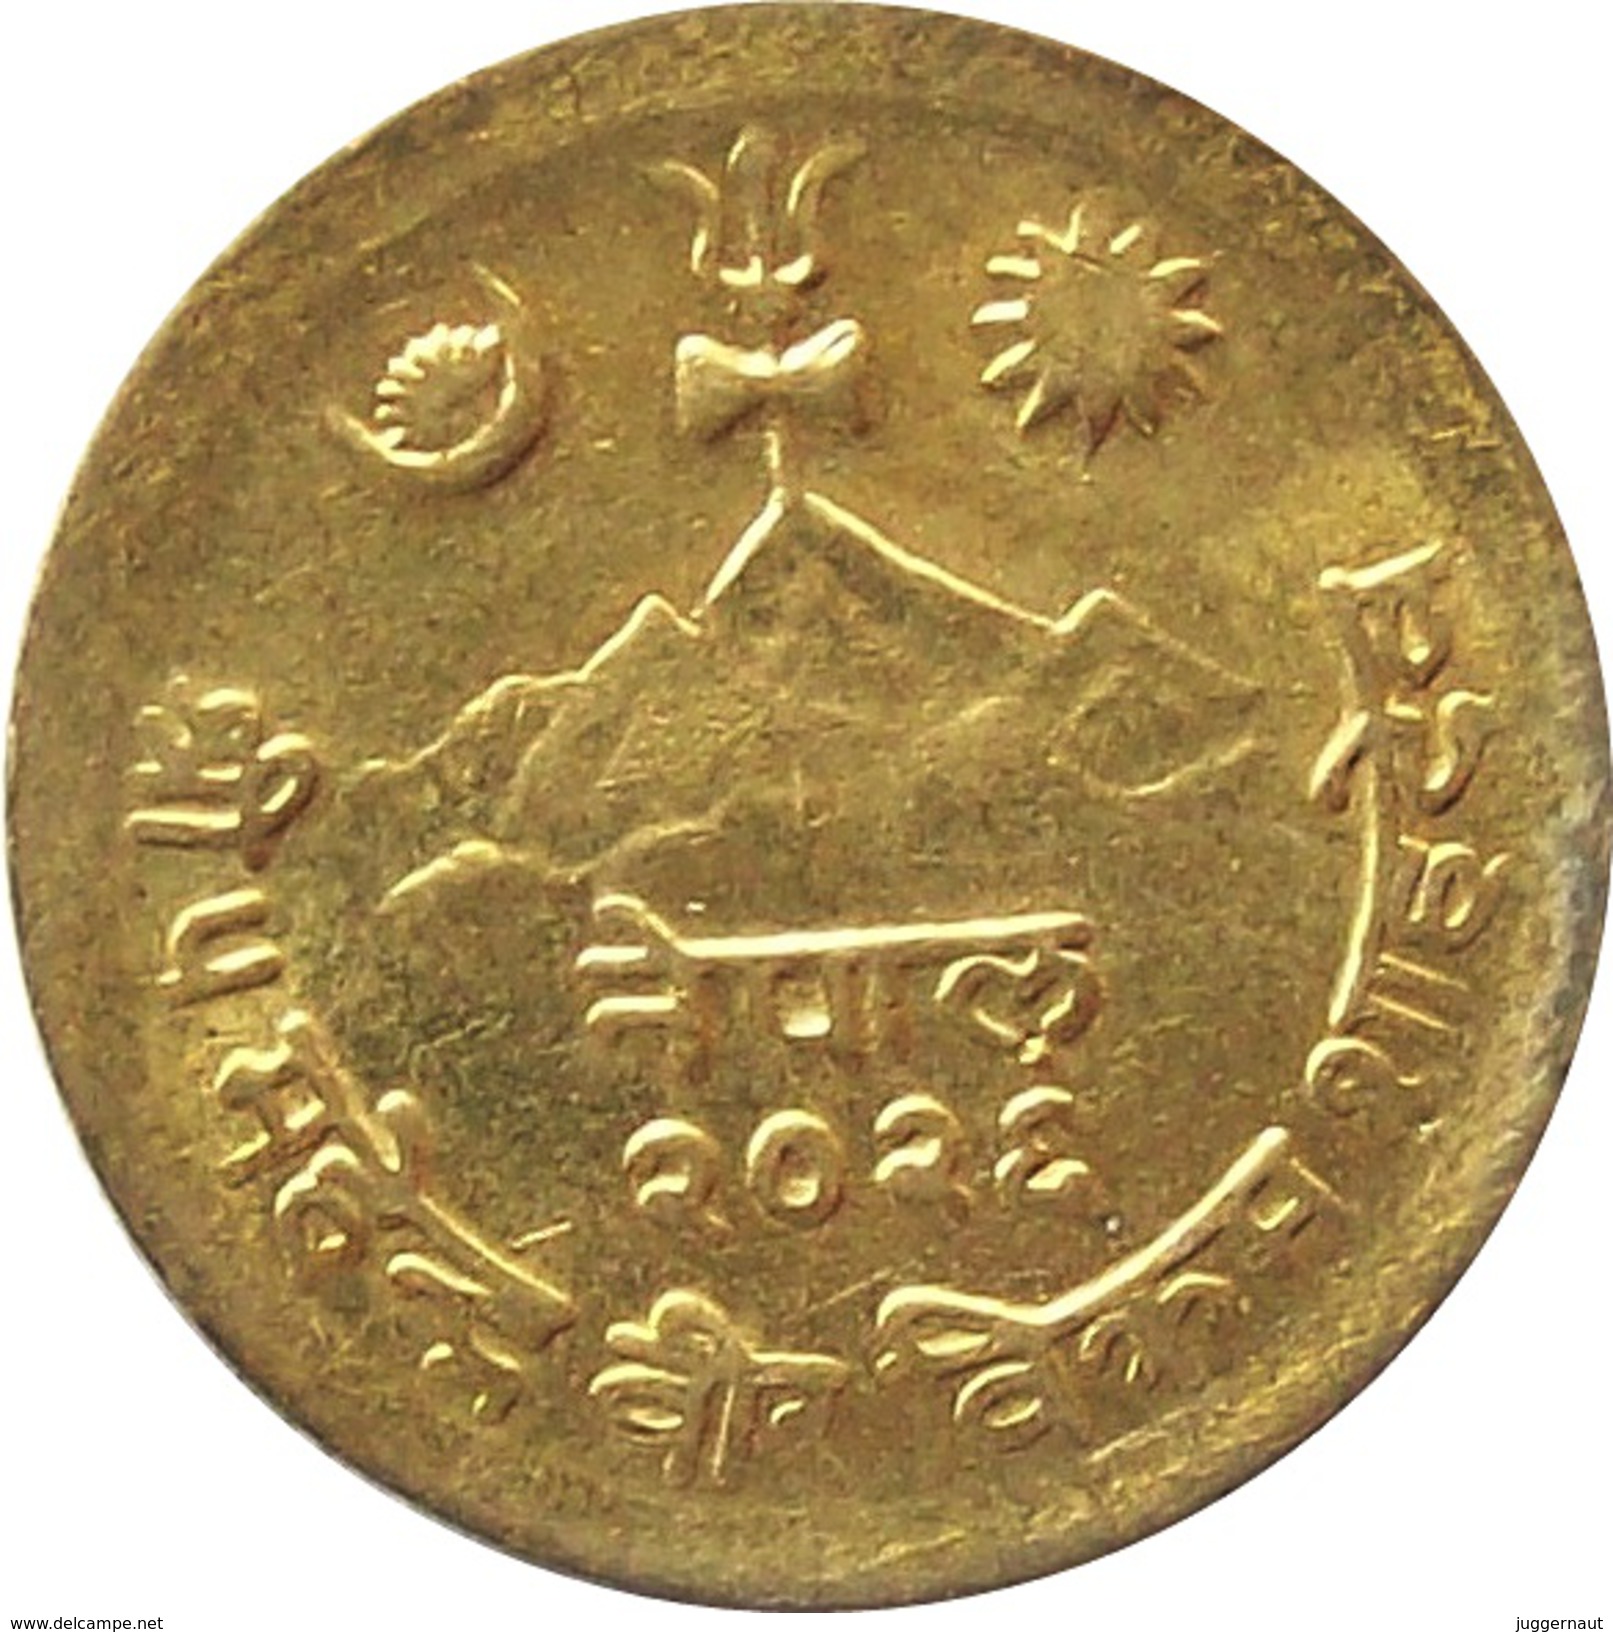 NEPAL 10- PAISA BRASS COIN 1969 KM-765 UNCIRCULATED UNC - Népal